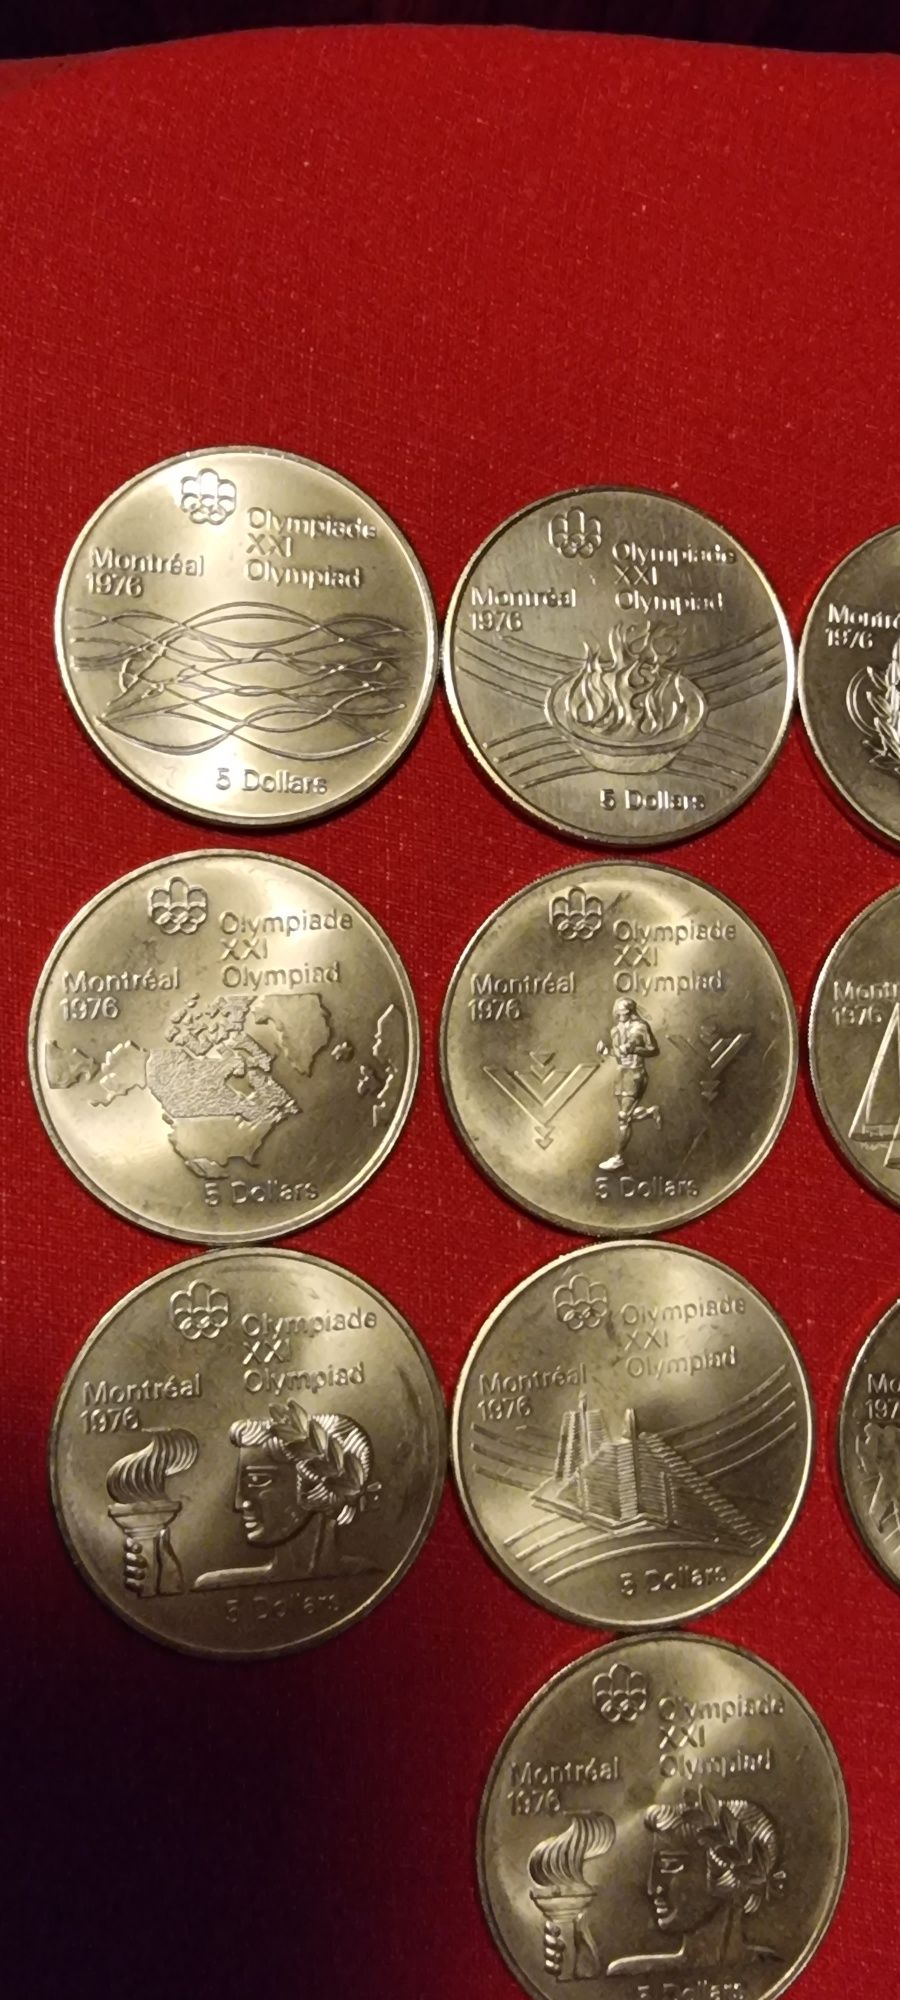 Vând lot 10 monede argint Canada, JO Montreal 1976